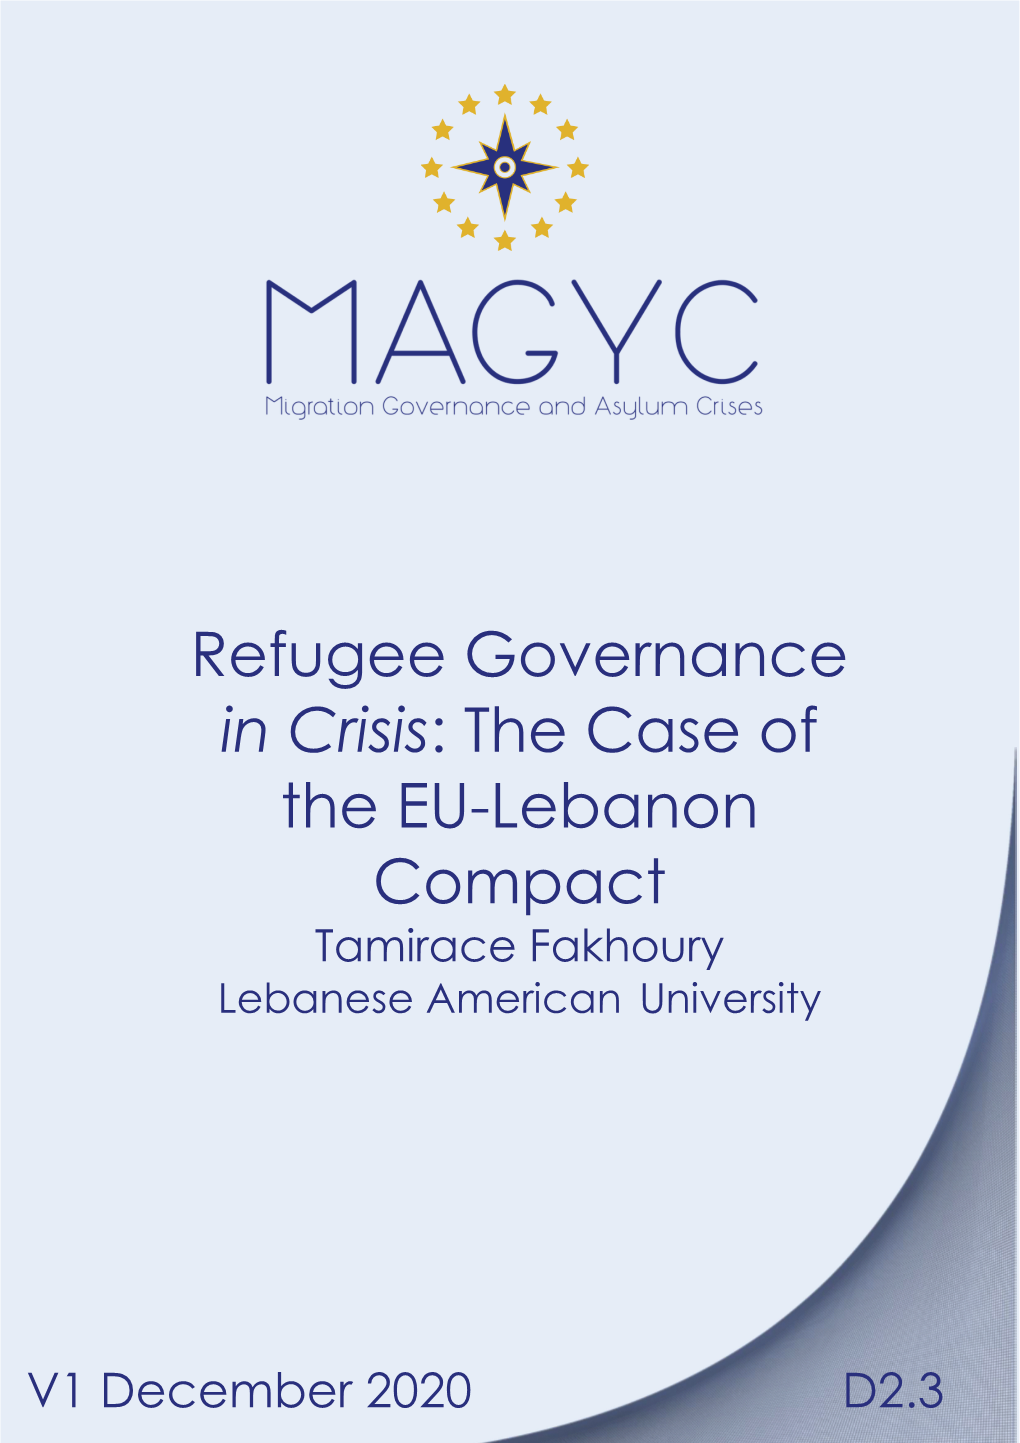 D2.3 Refugee Governance in Crisis: the Case of the EU-Lebanon Compact